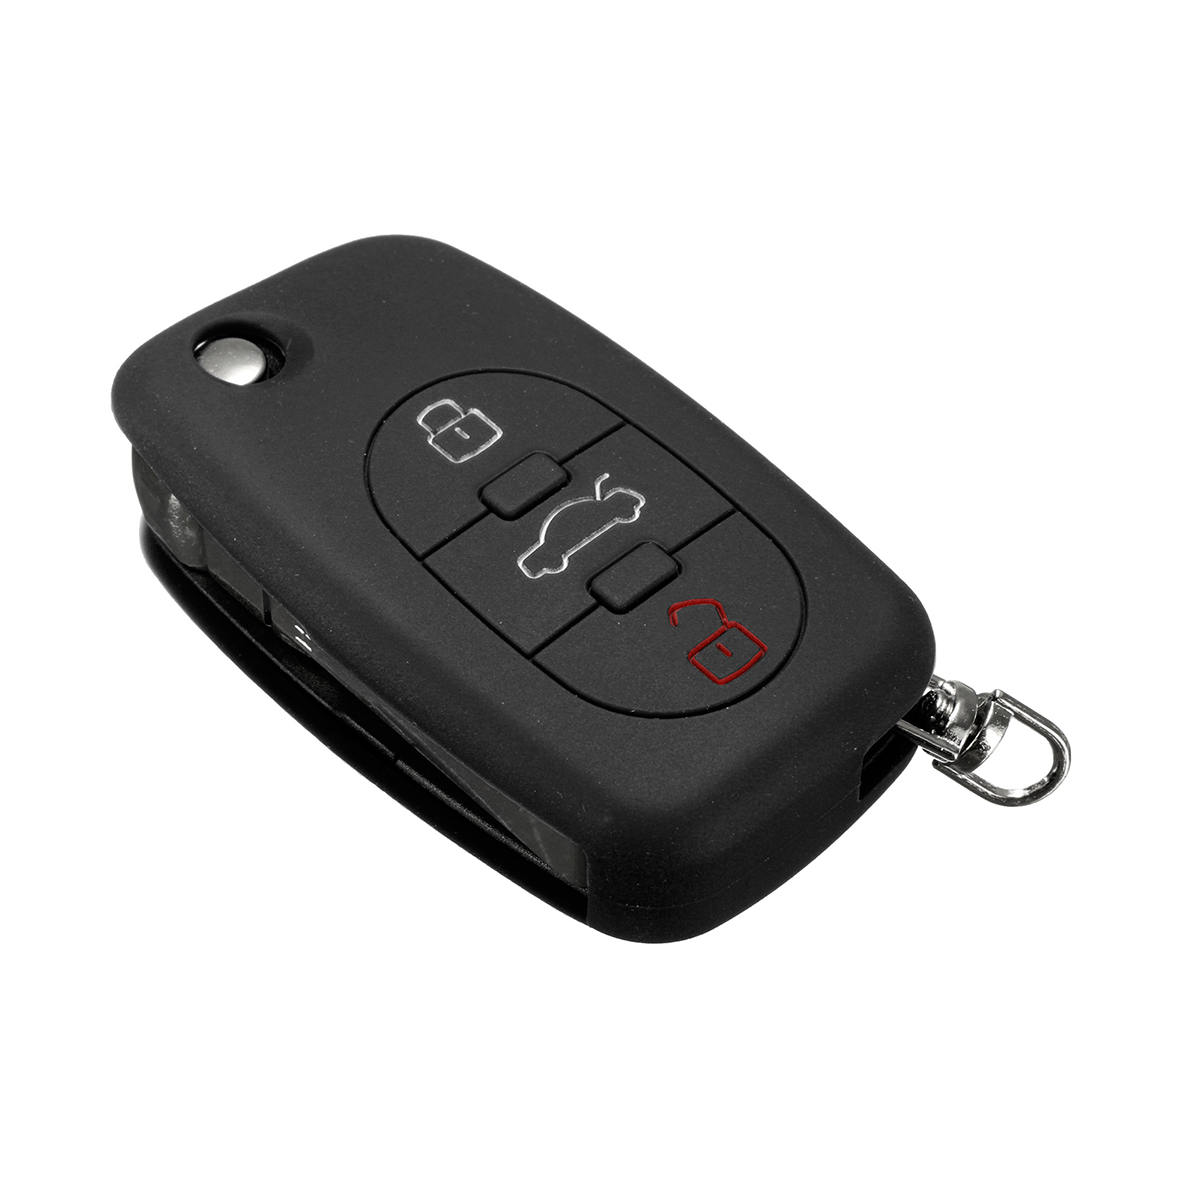 Silicone 3 Button Flip Remote Key Fob Case Cover for Audi A2 A3 A4 A6 A8